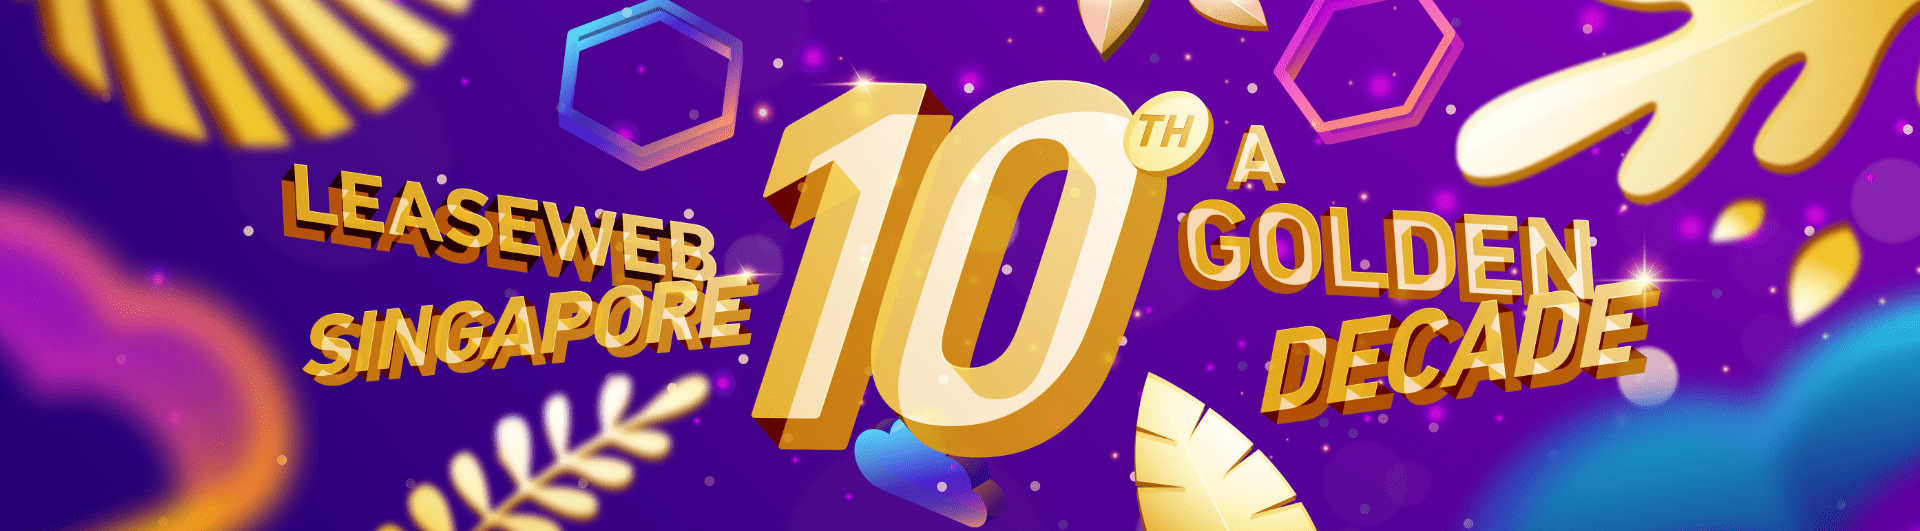 Leaseweb Singapore Celebrates 10 Golden Years